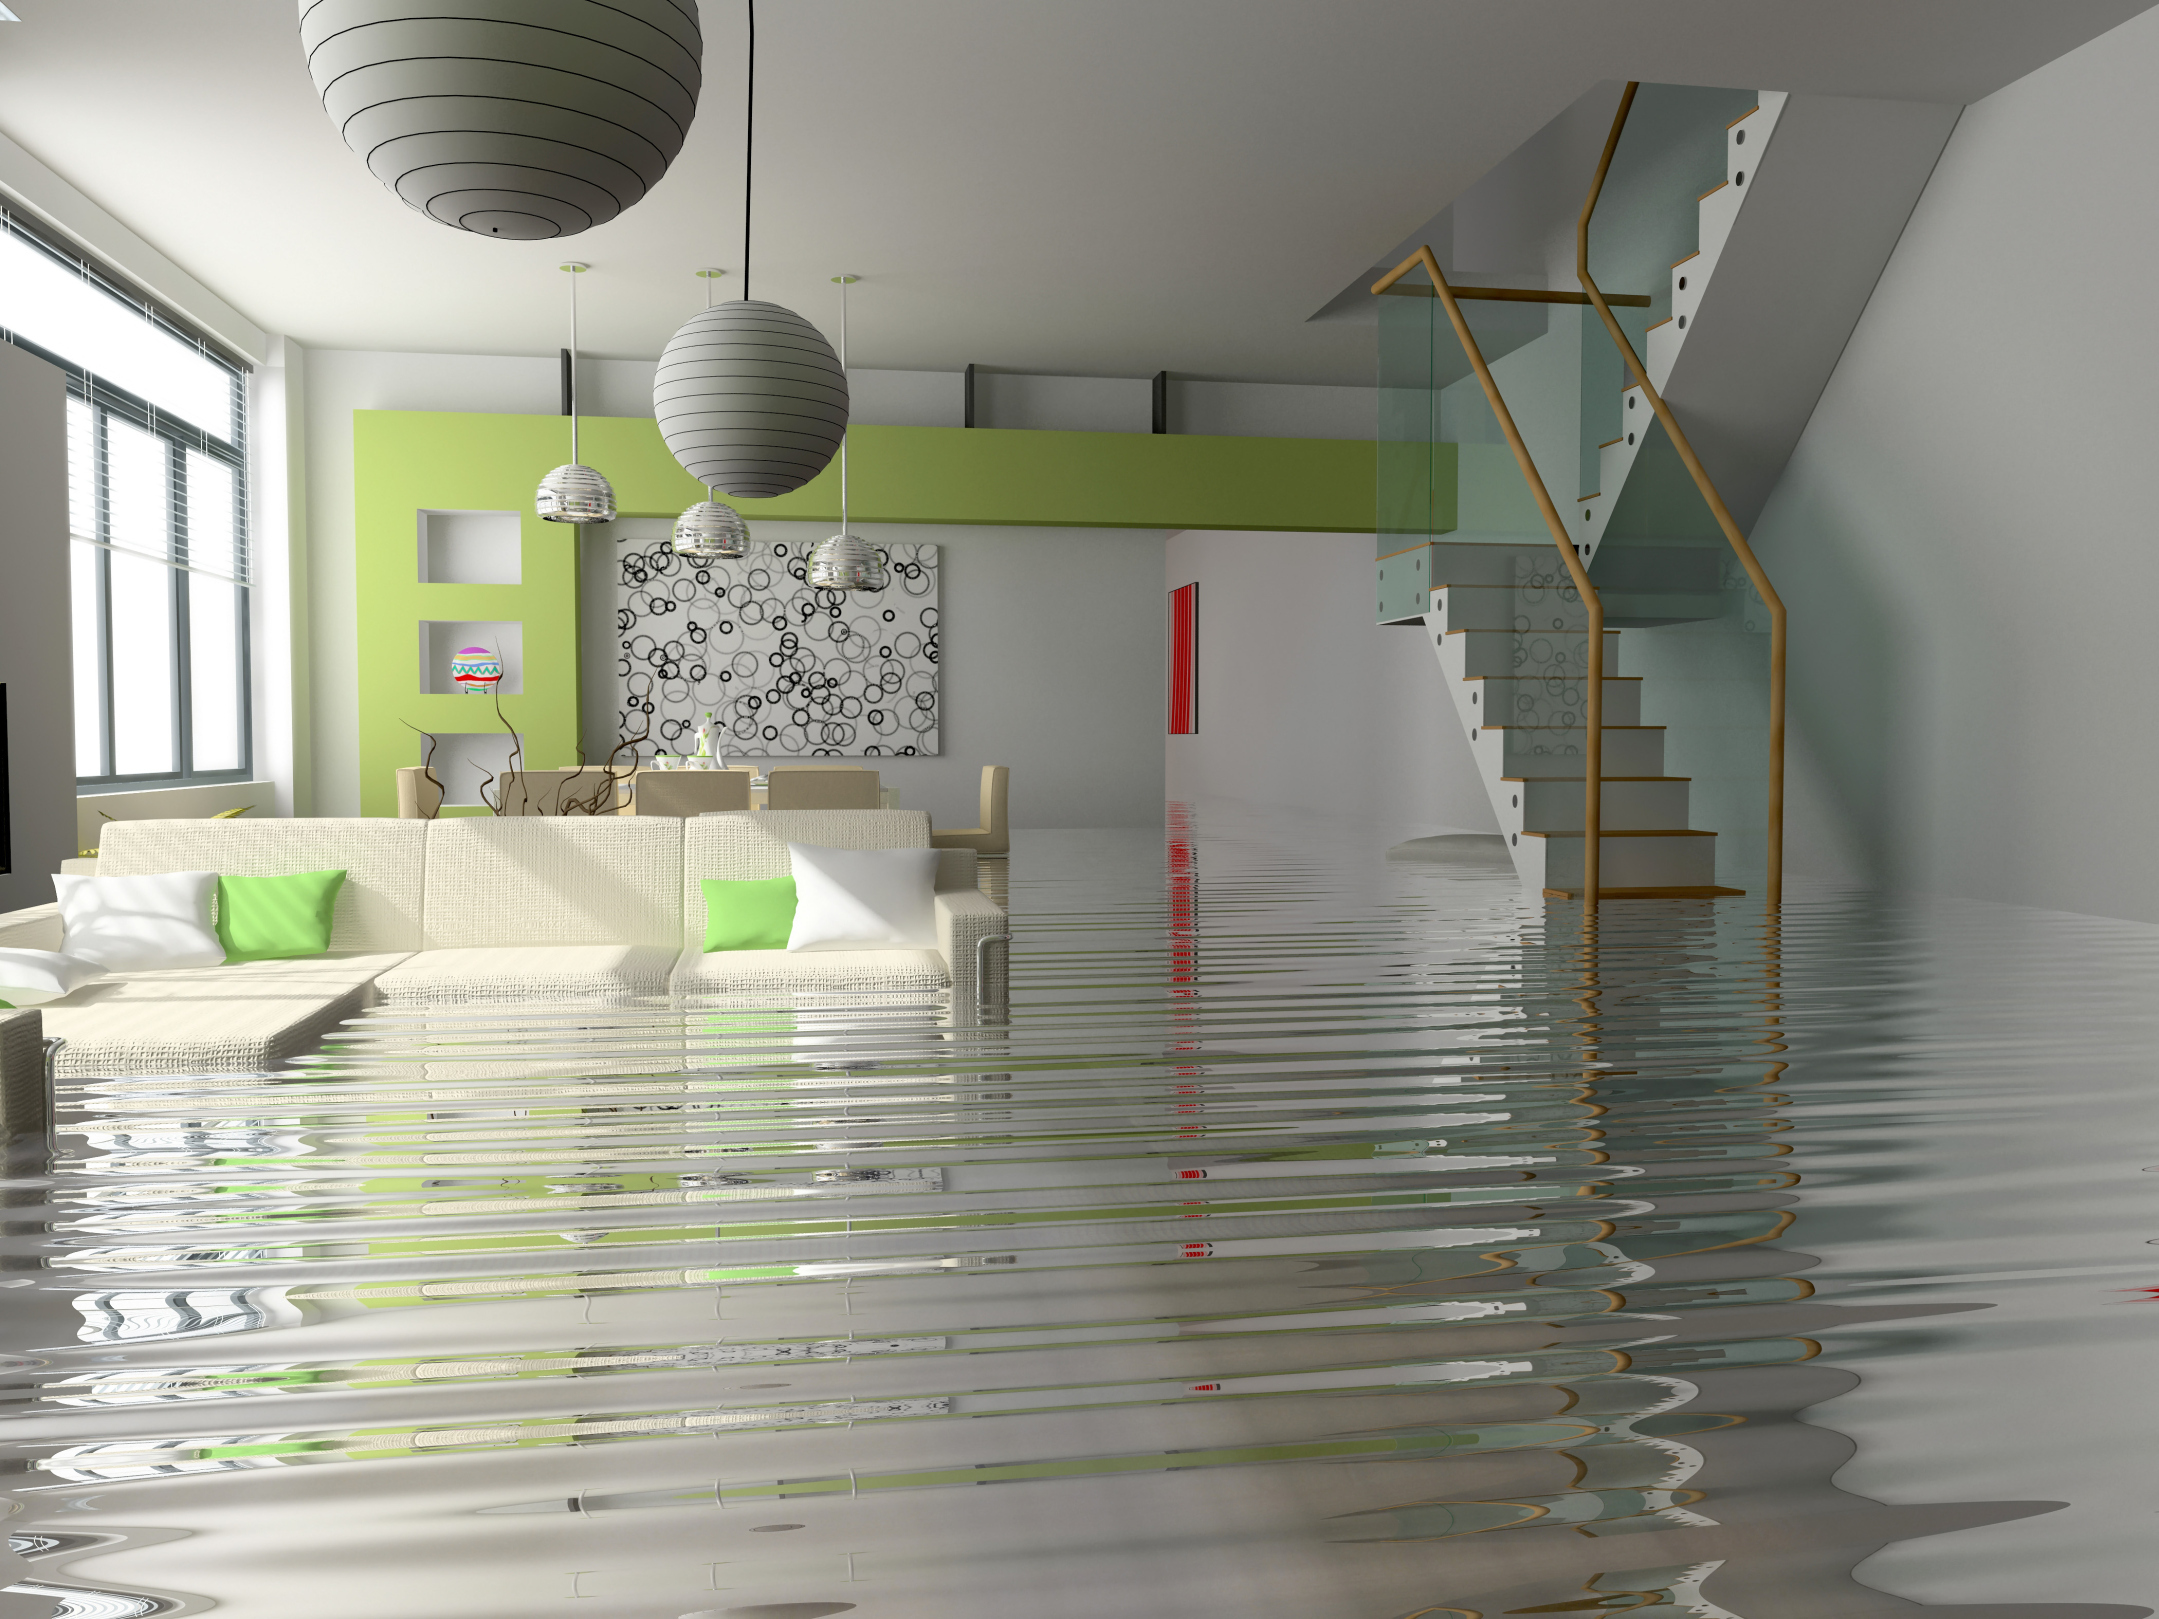 Flooded basements